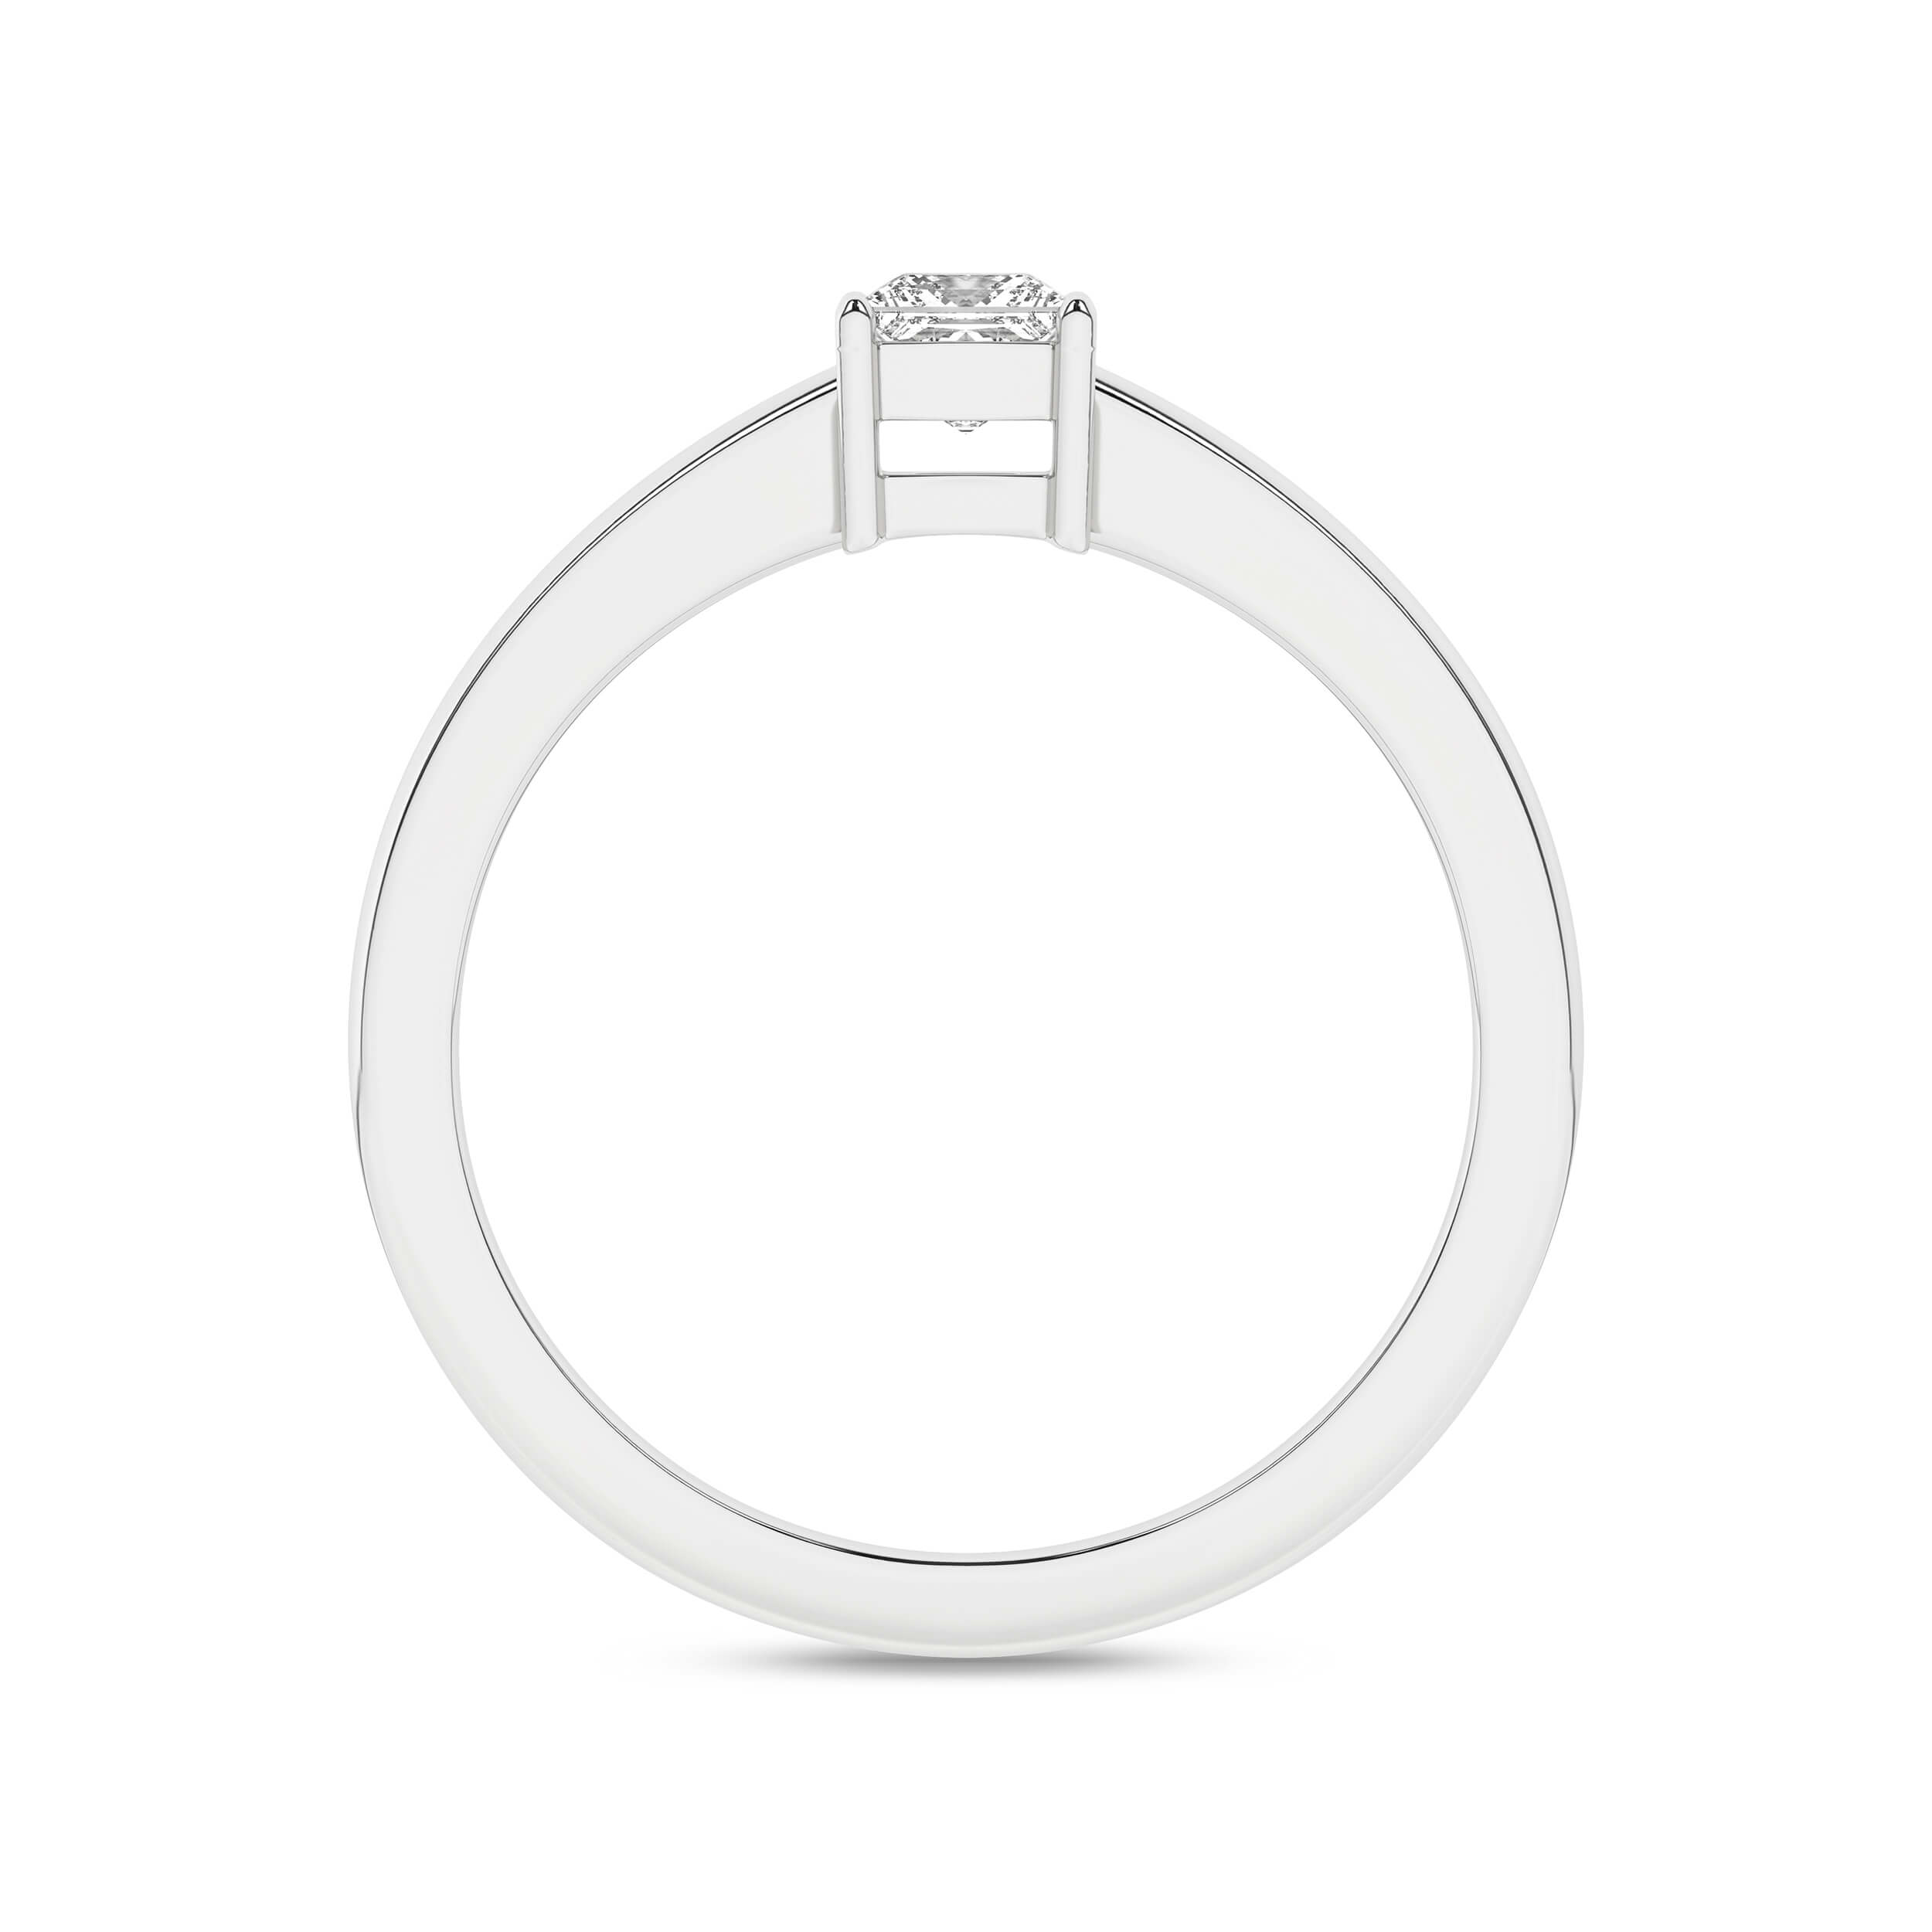 Inel de logodna din Aur Alb 14K cu Diamant 0.25Ct, articol RS1334, previzualizare foto 3